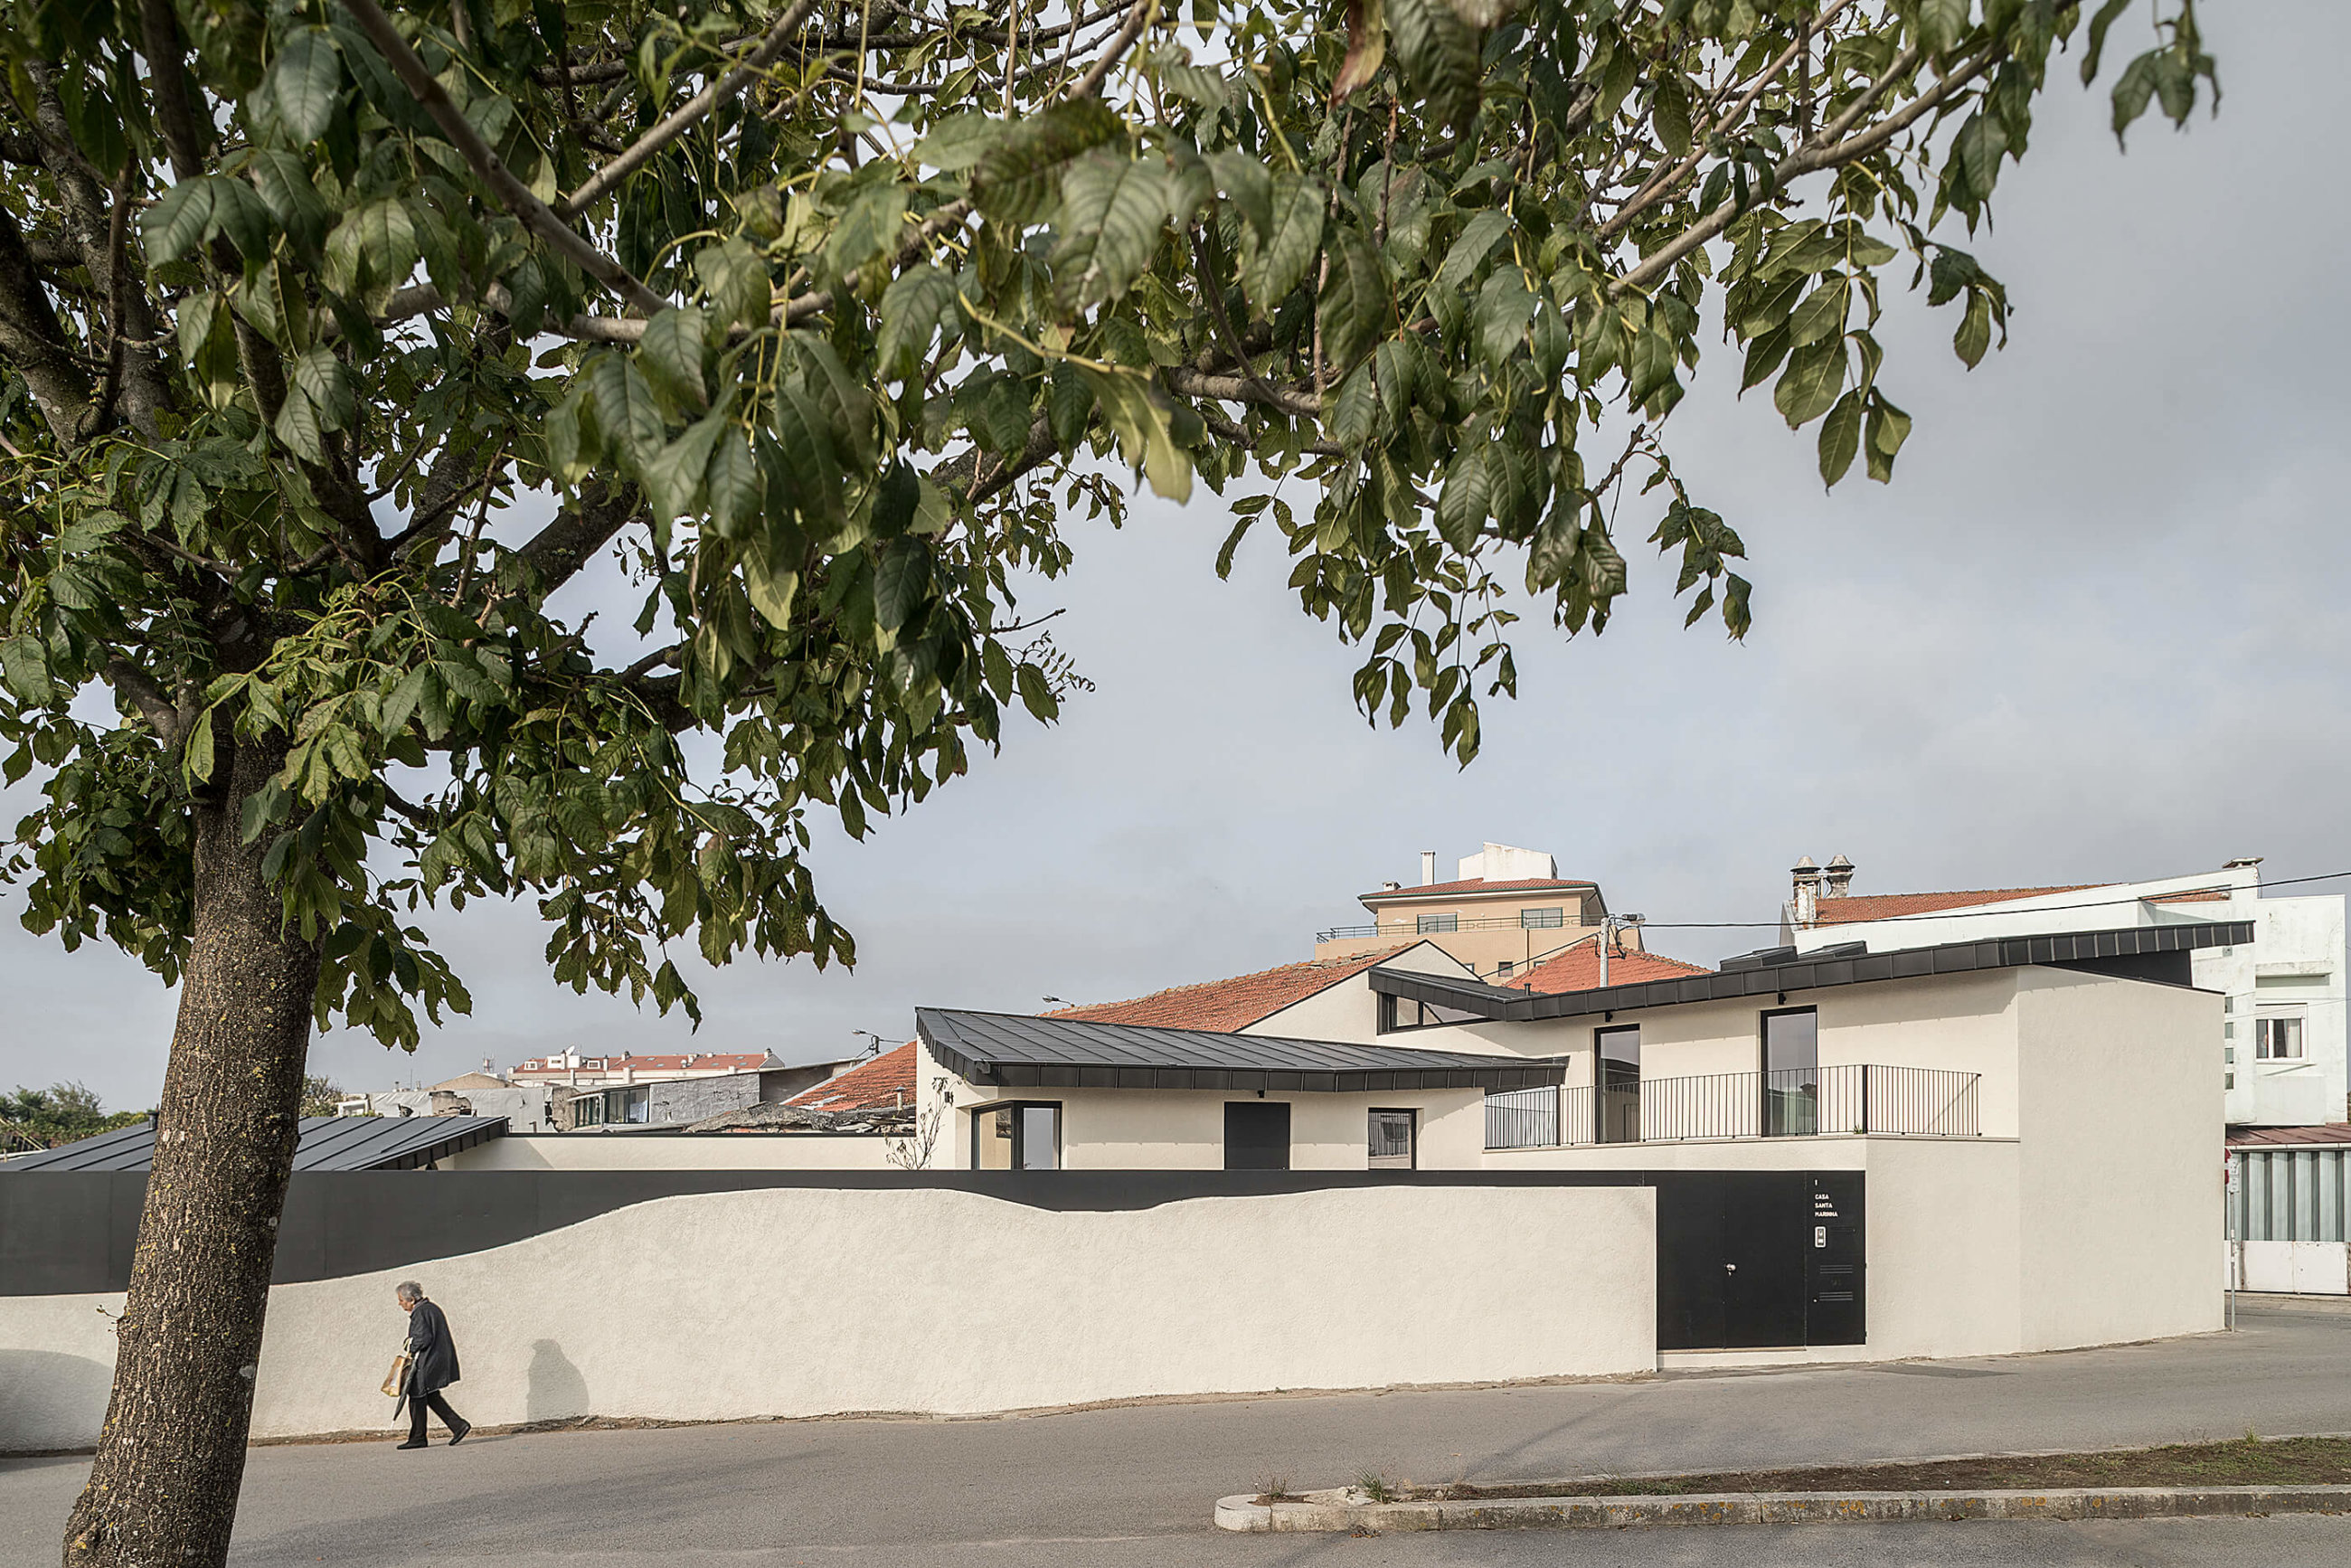 Reportagem Fotografia de arquitectura portuguesa fotografo Ivo tavares studio projecto Casa Santa Marinha de Paulo Moreira Architecture.